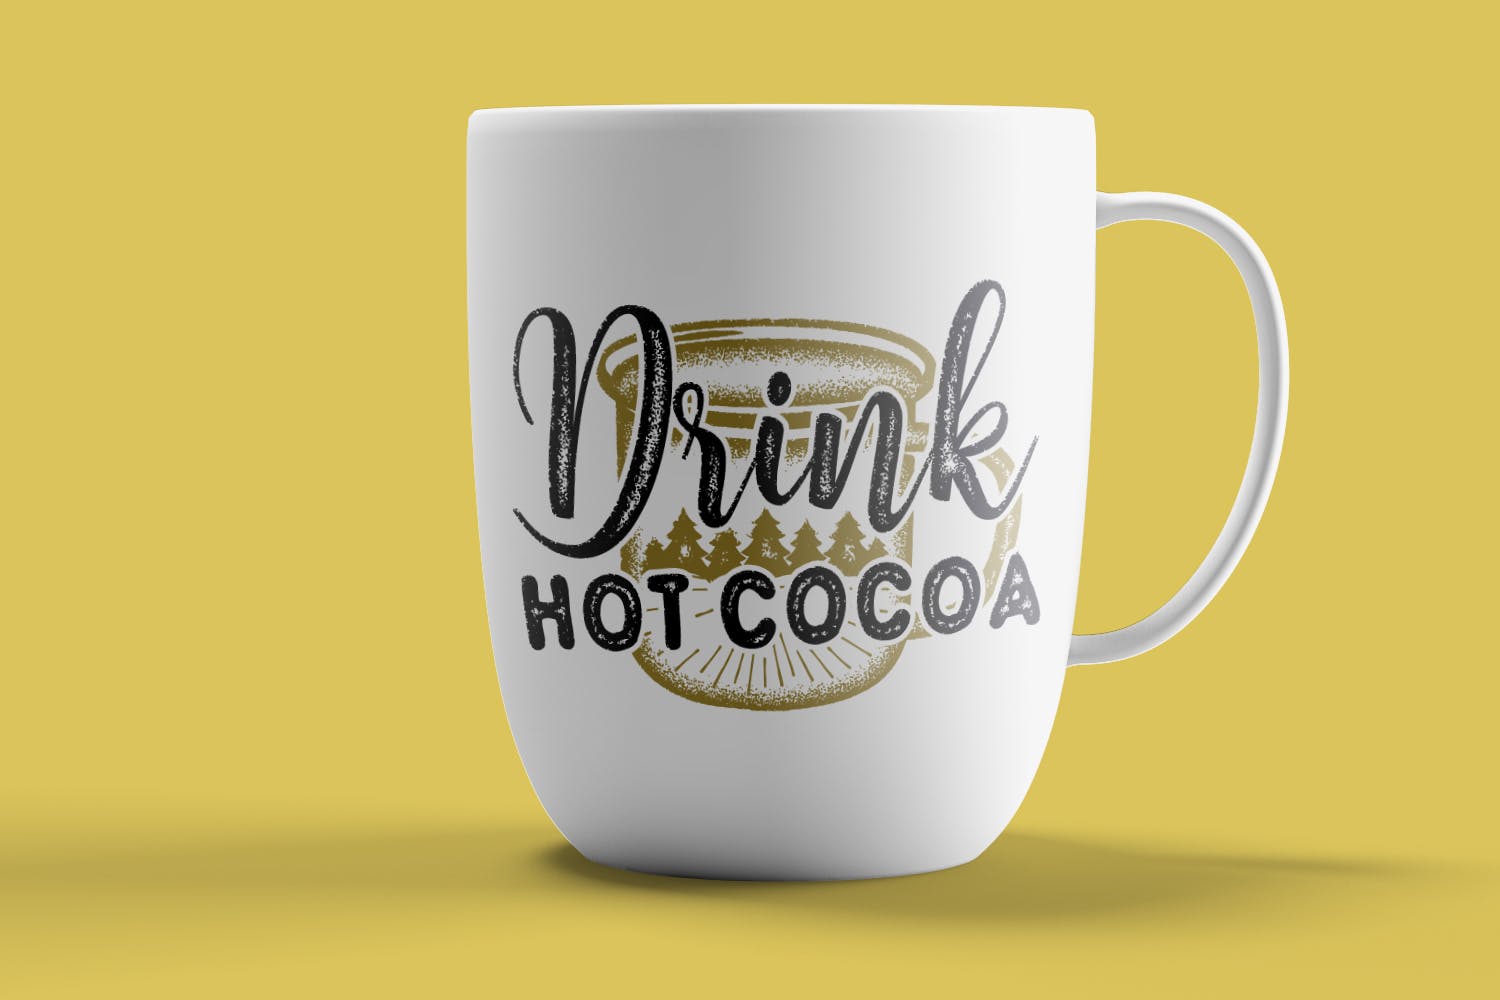 热可可饮料矢量插画圣诞节主题T恤印花设计模板 Drink Hot Cocoa Christmas Vector T-Shirt SVG, Tee插图(2)